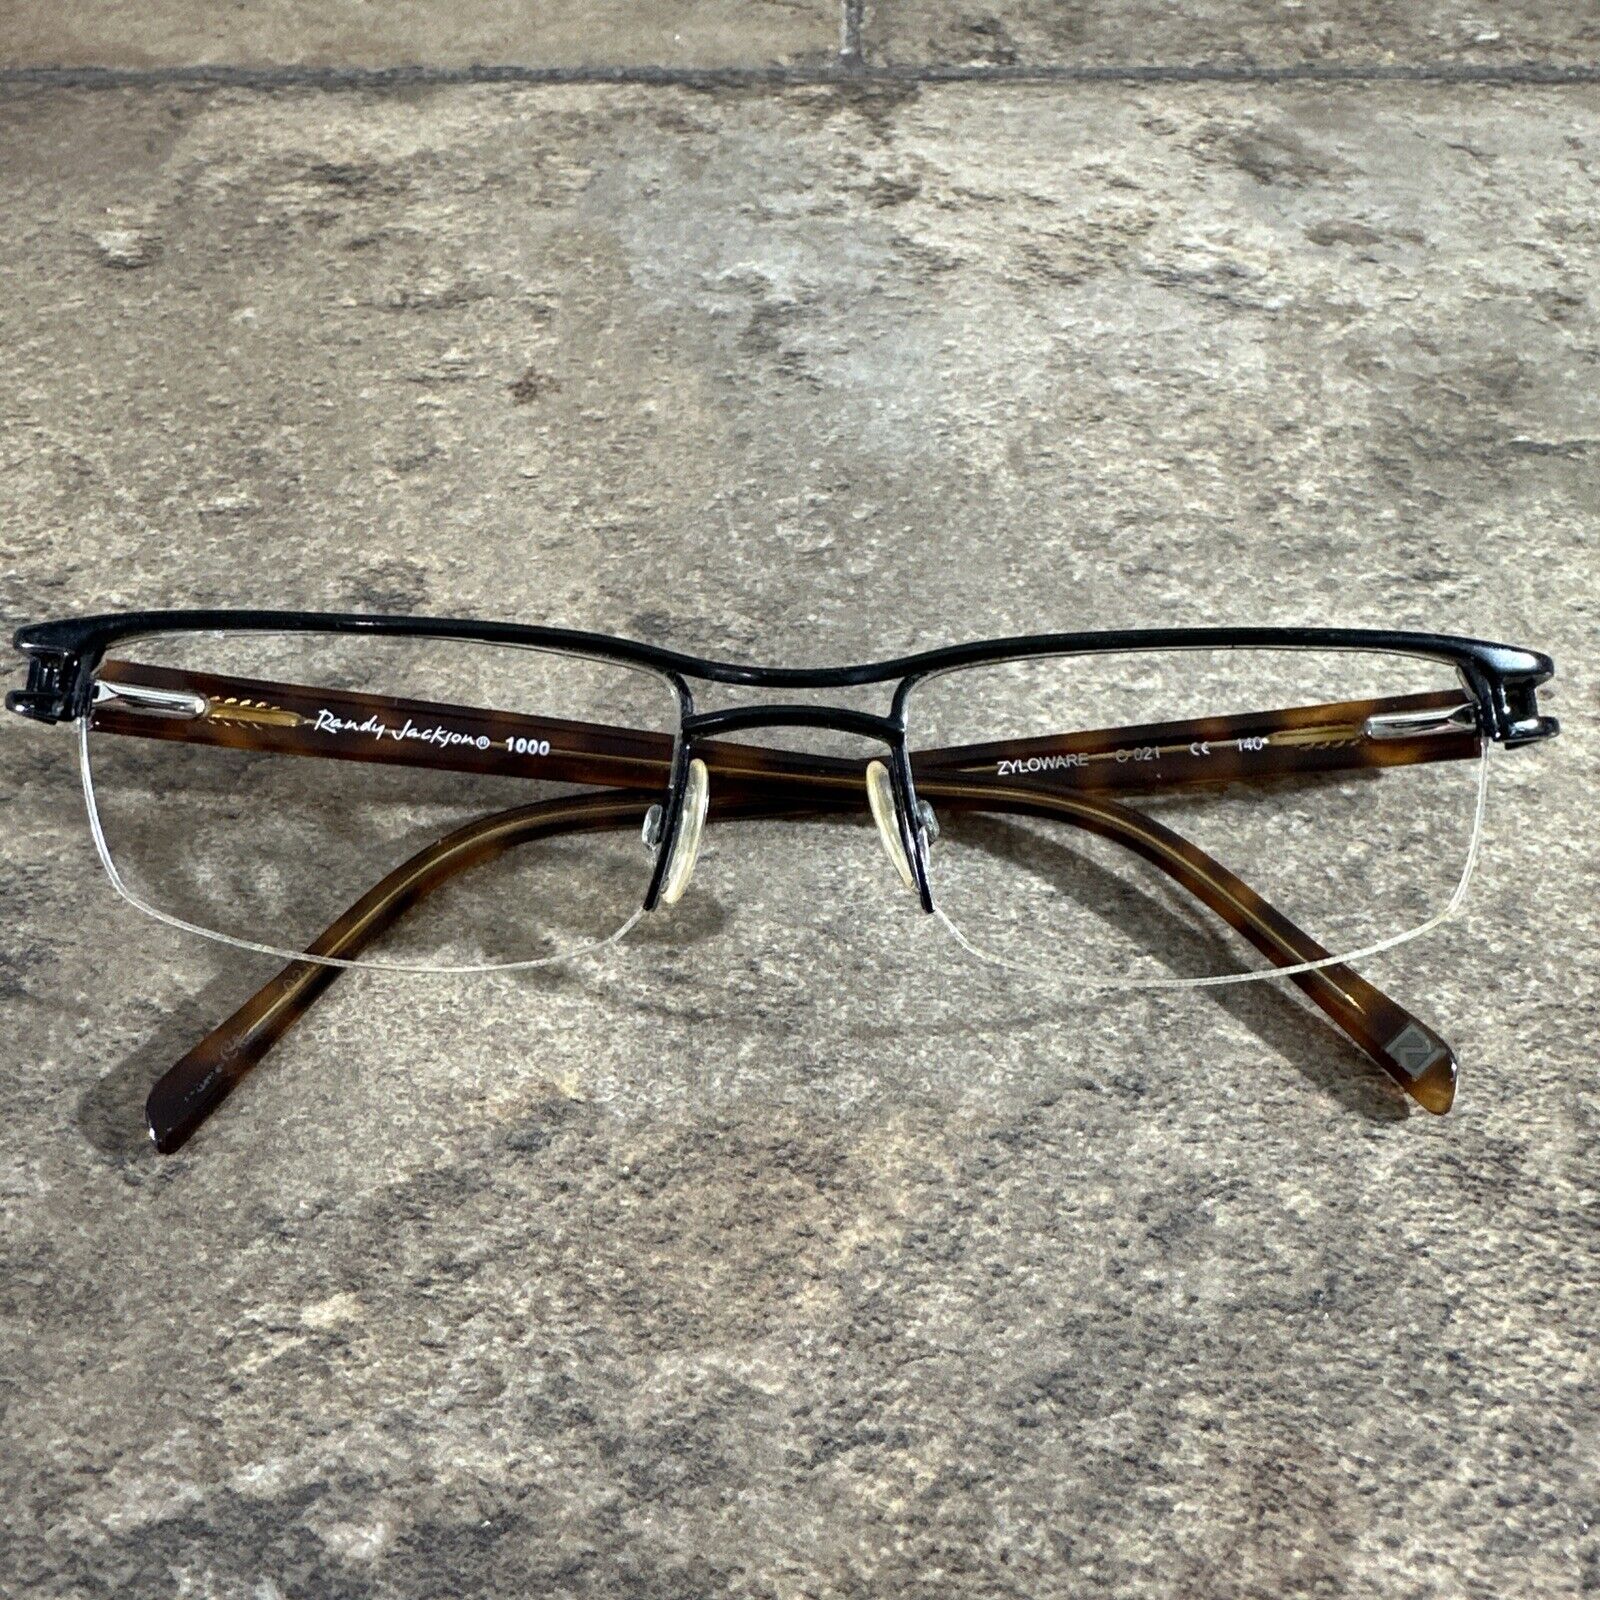 Randy Jackson Signature 1000 C 021 Brown Tortoise Eyeglasses Frames 53-19-140-27